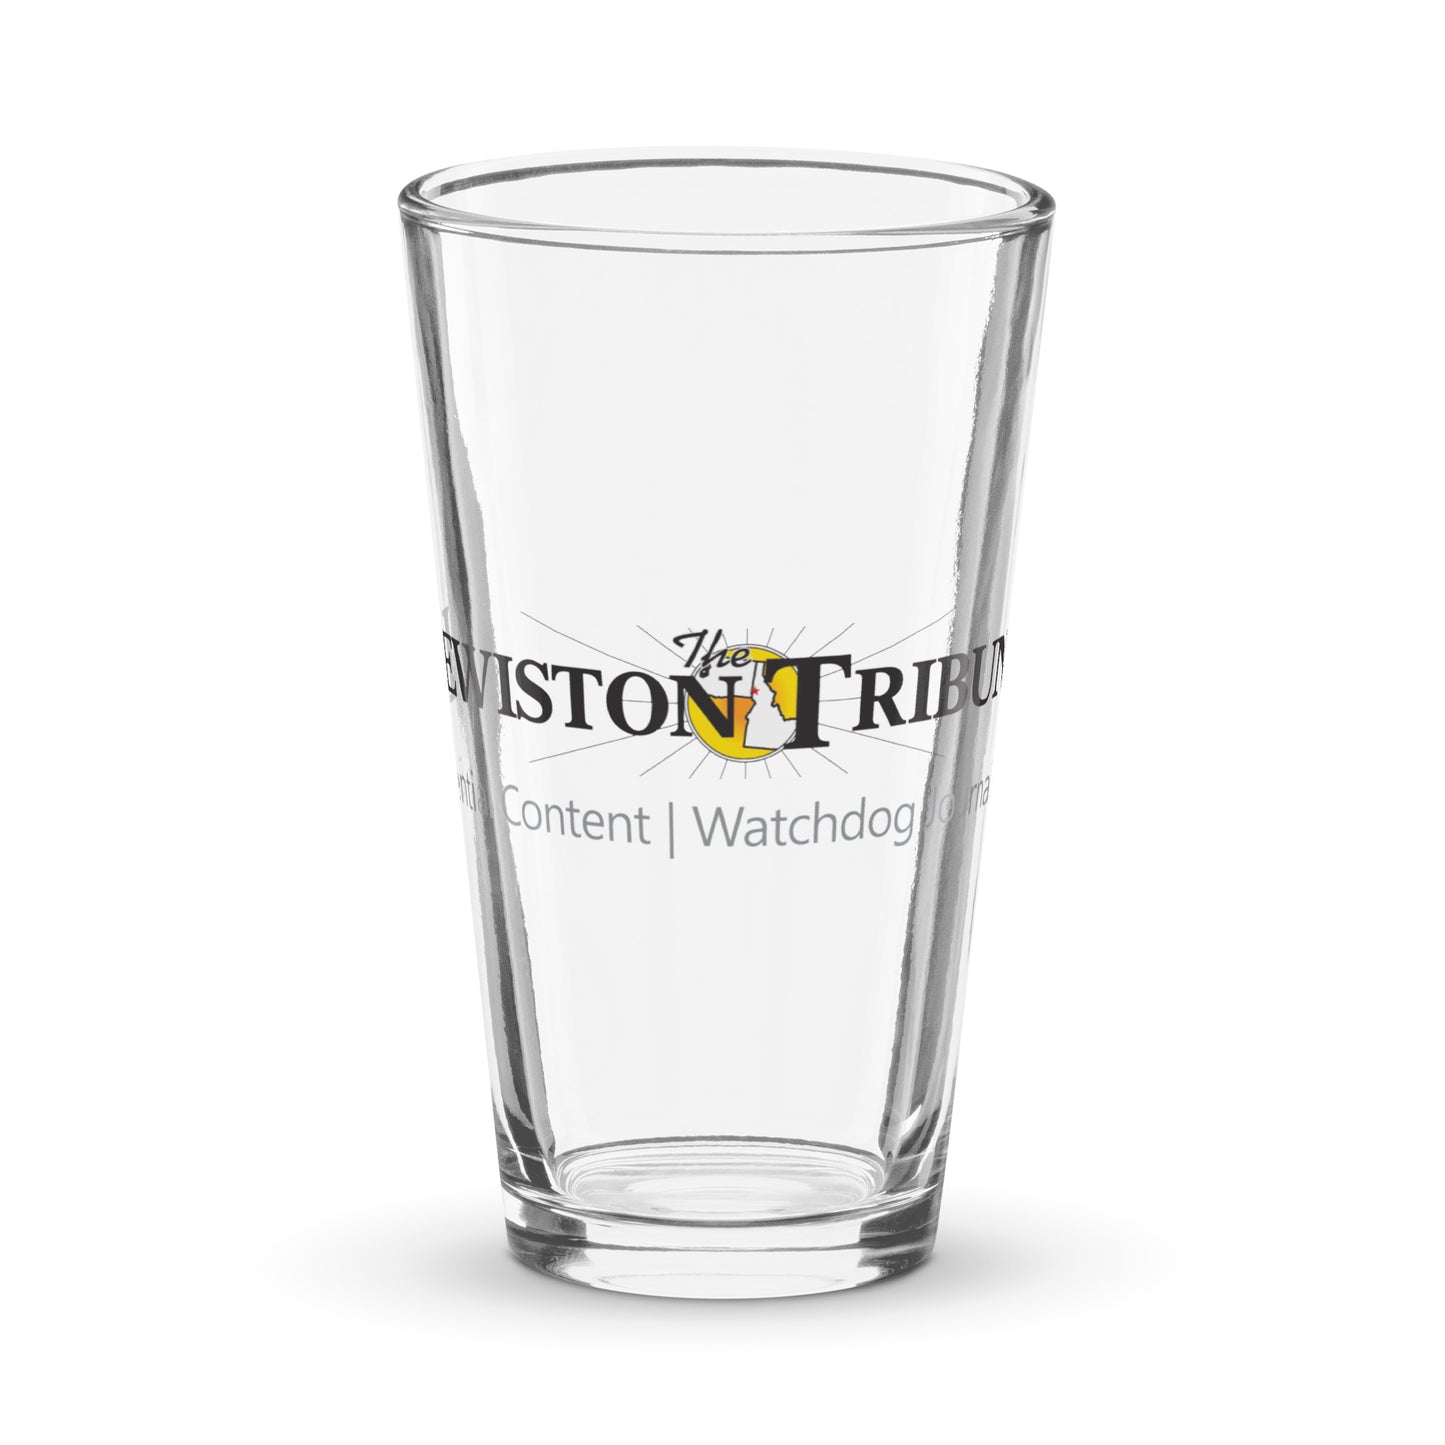 Lewiston Tribune, Shaker pint glass